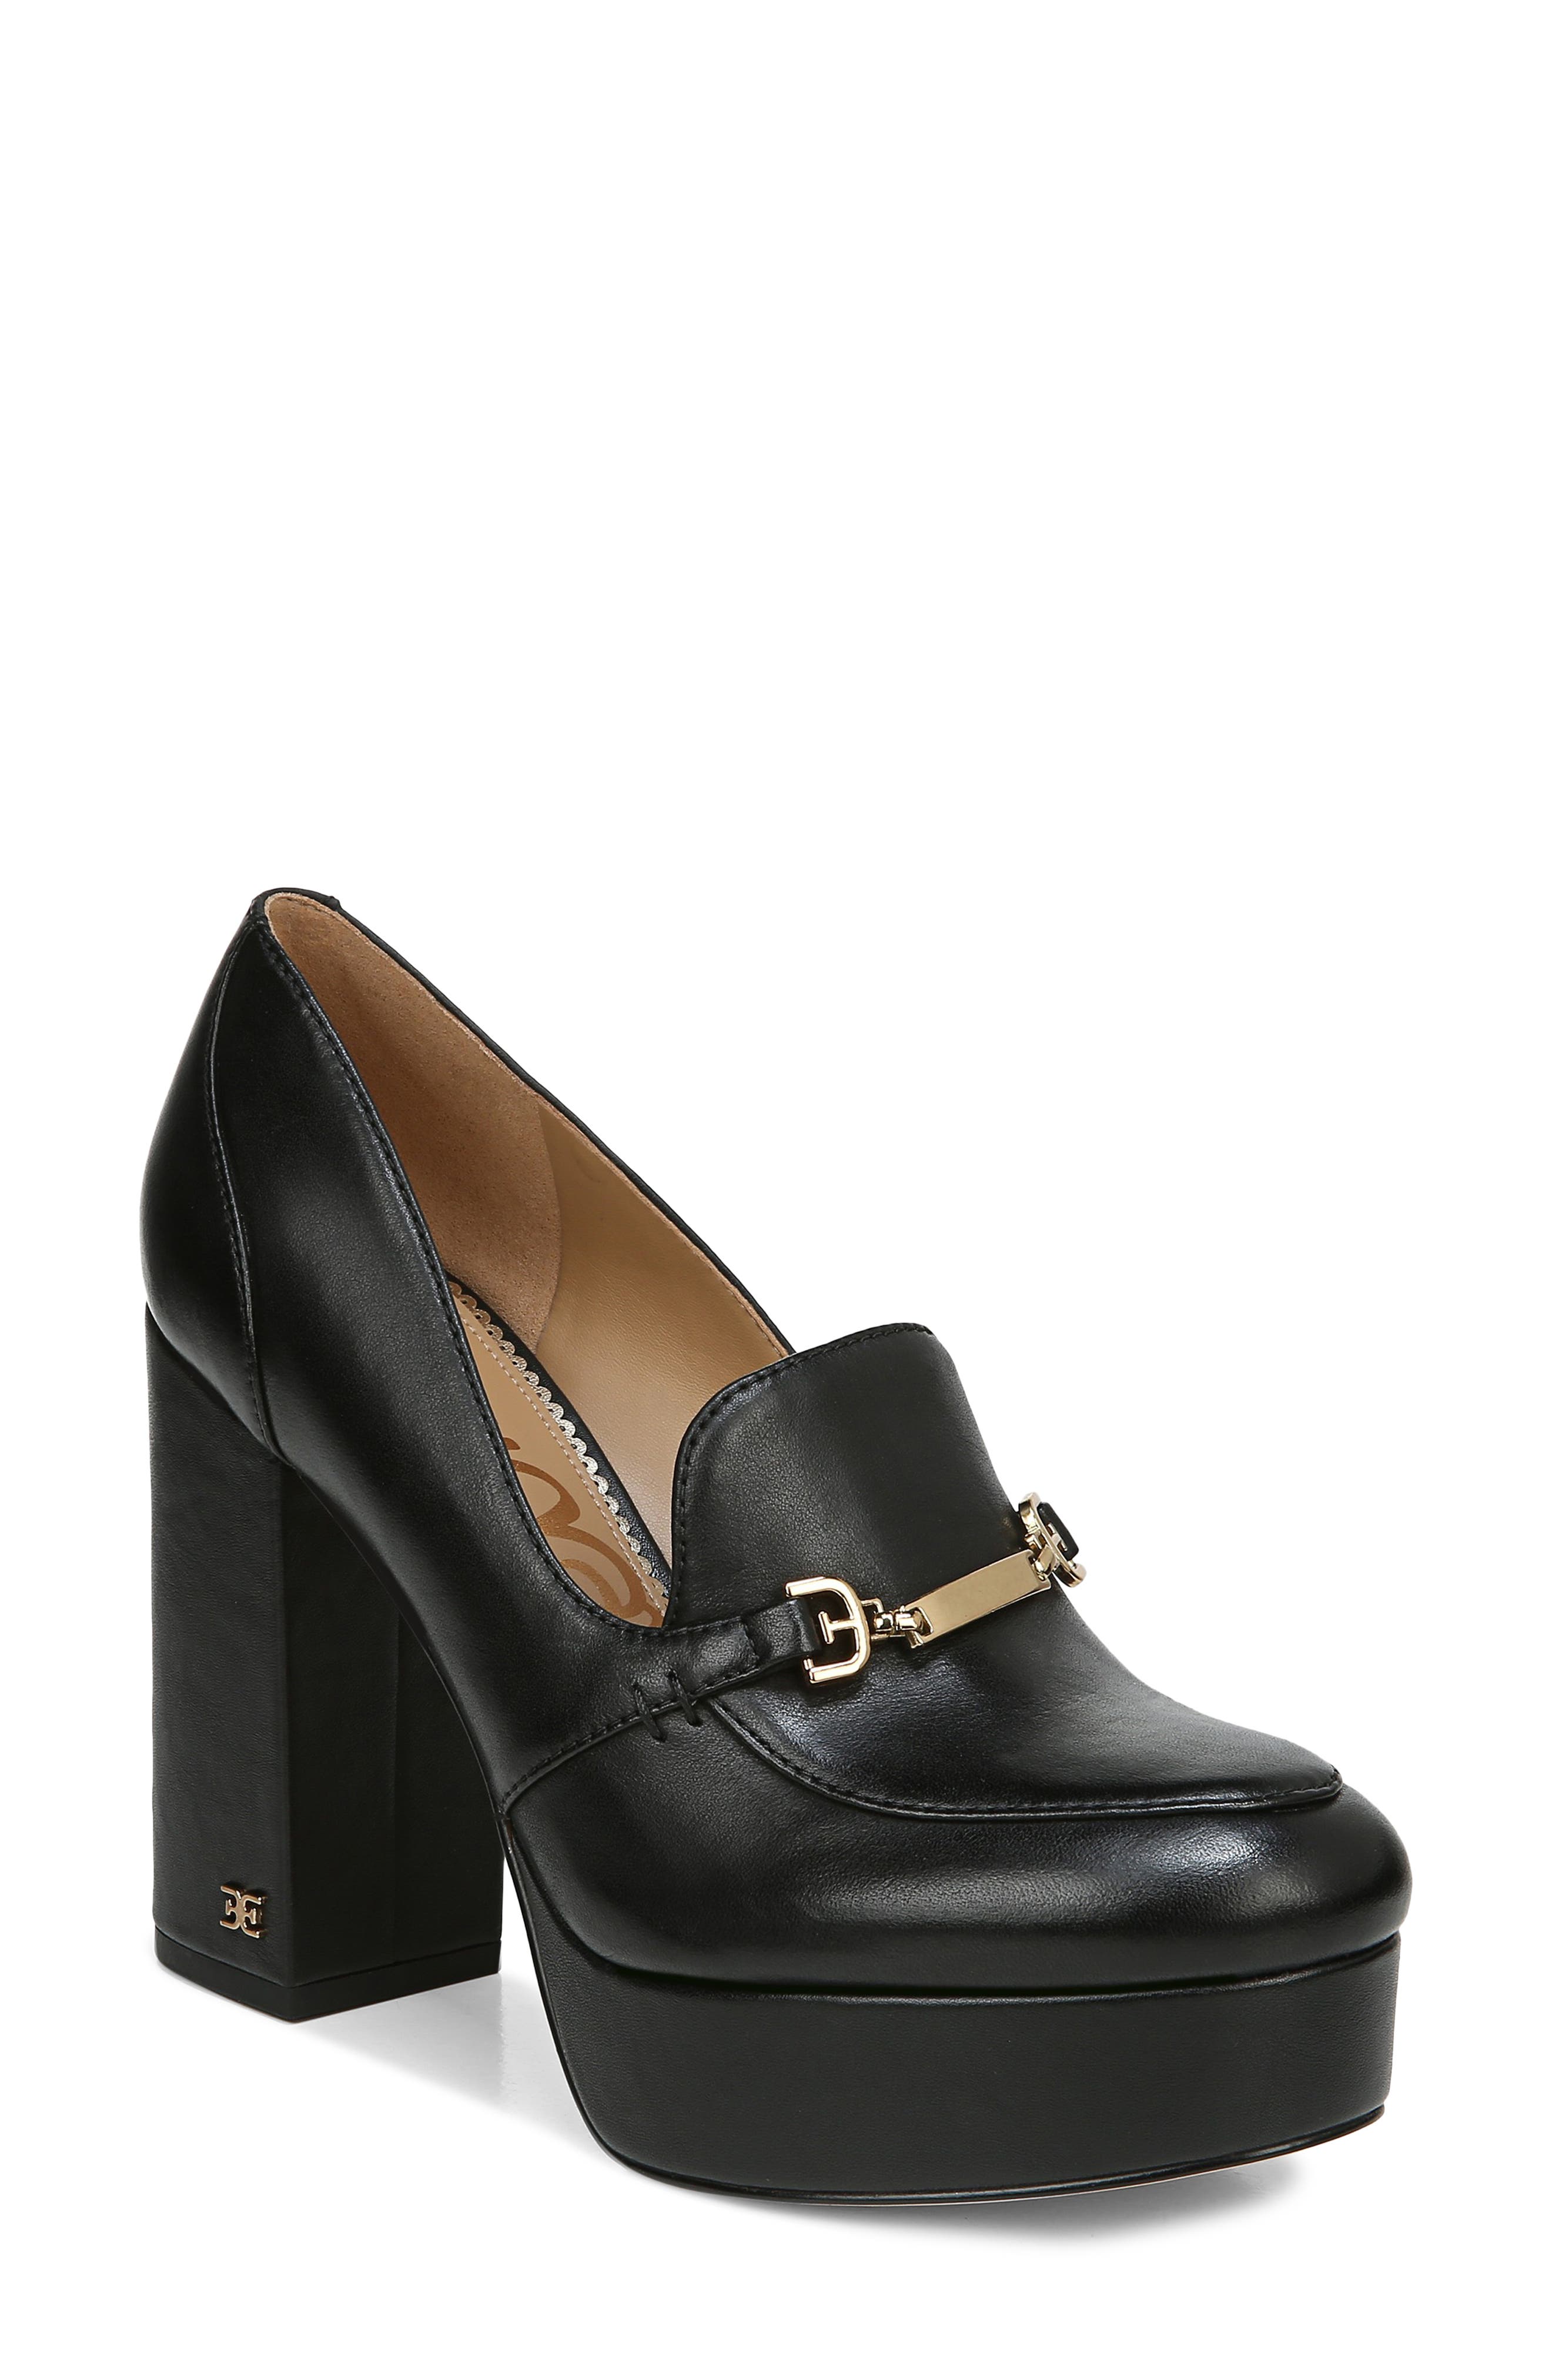 Buy > black heel loafers womens > in stock